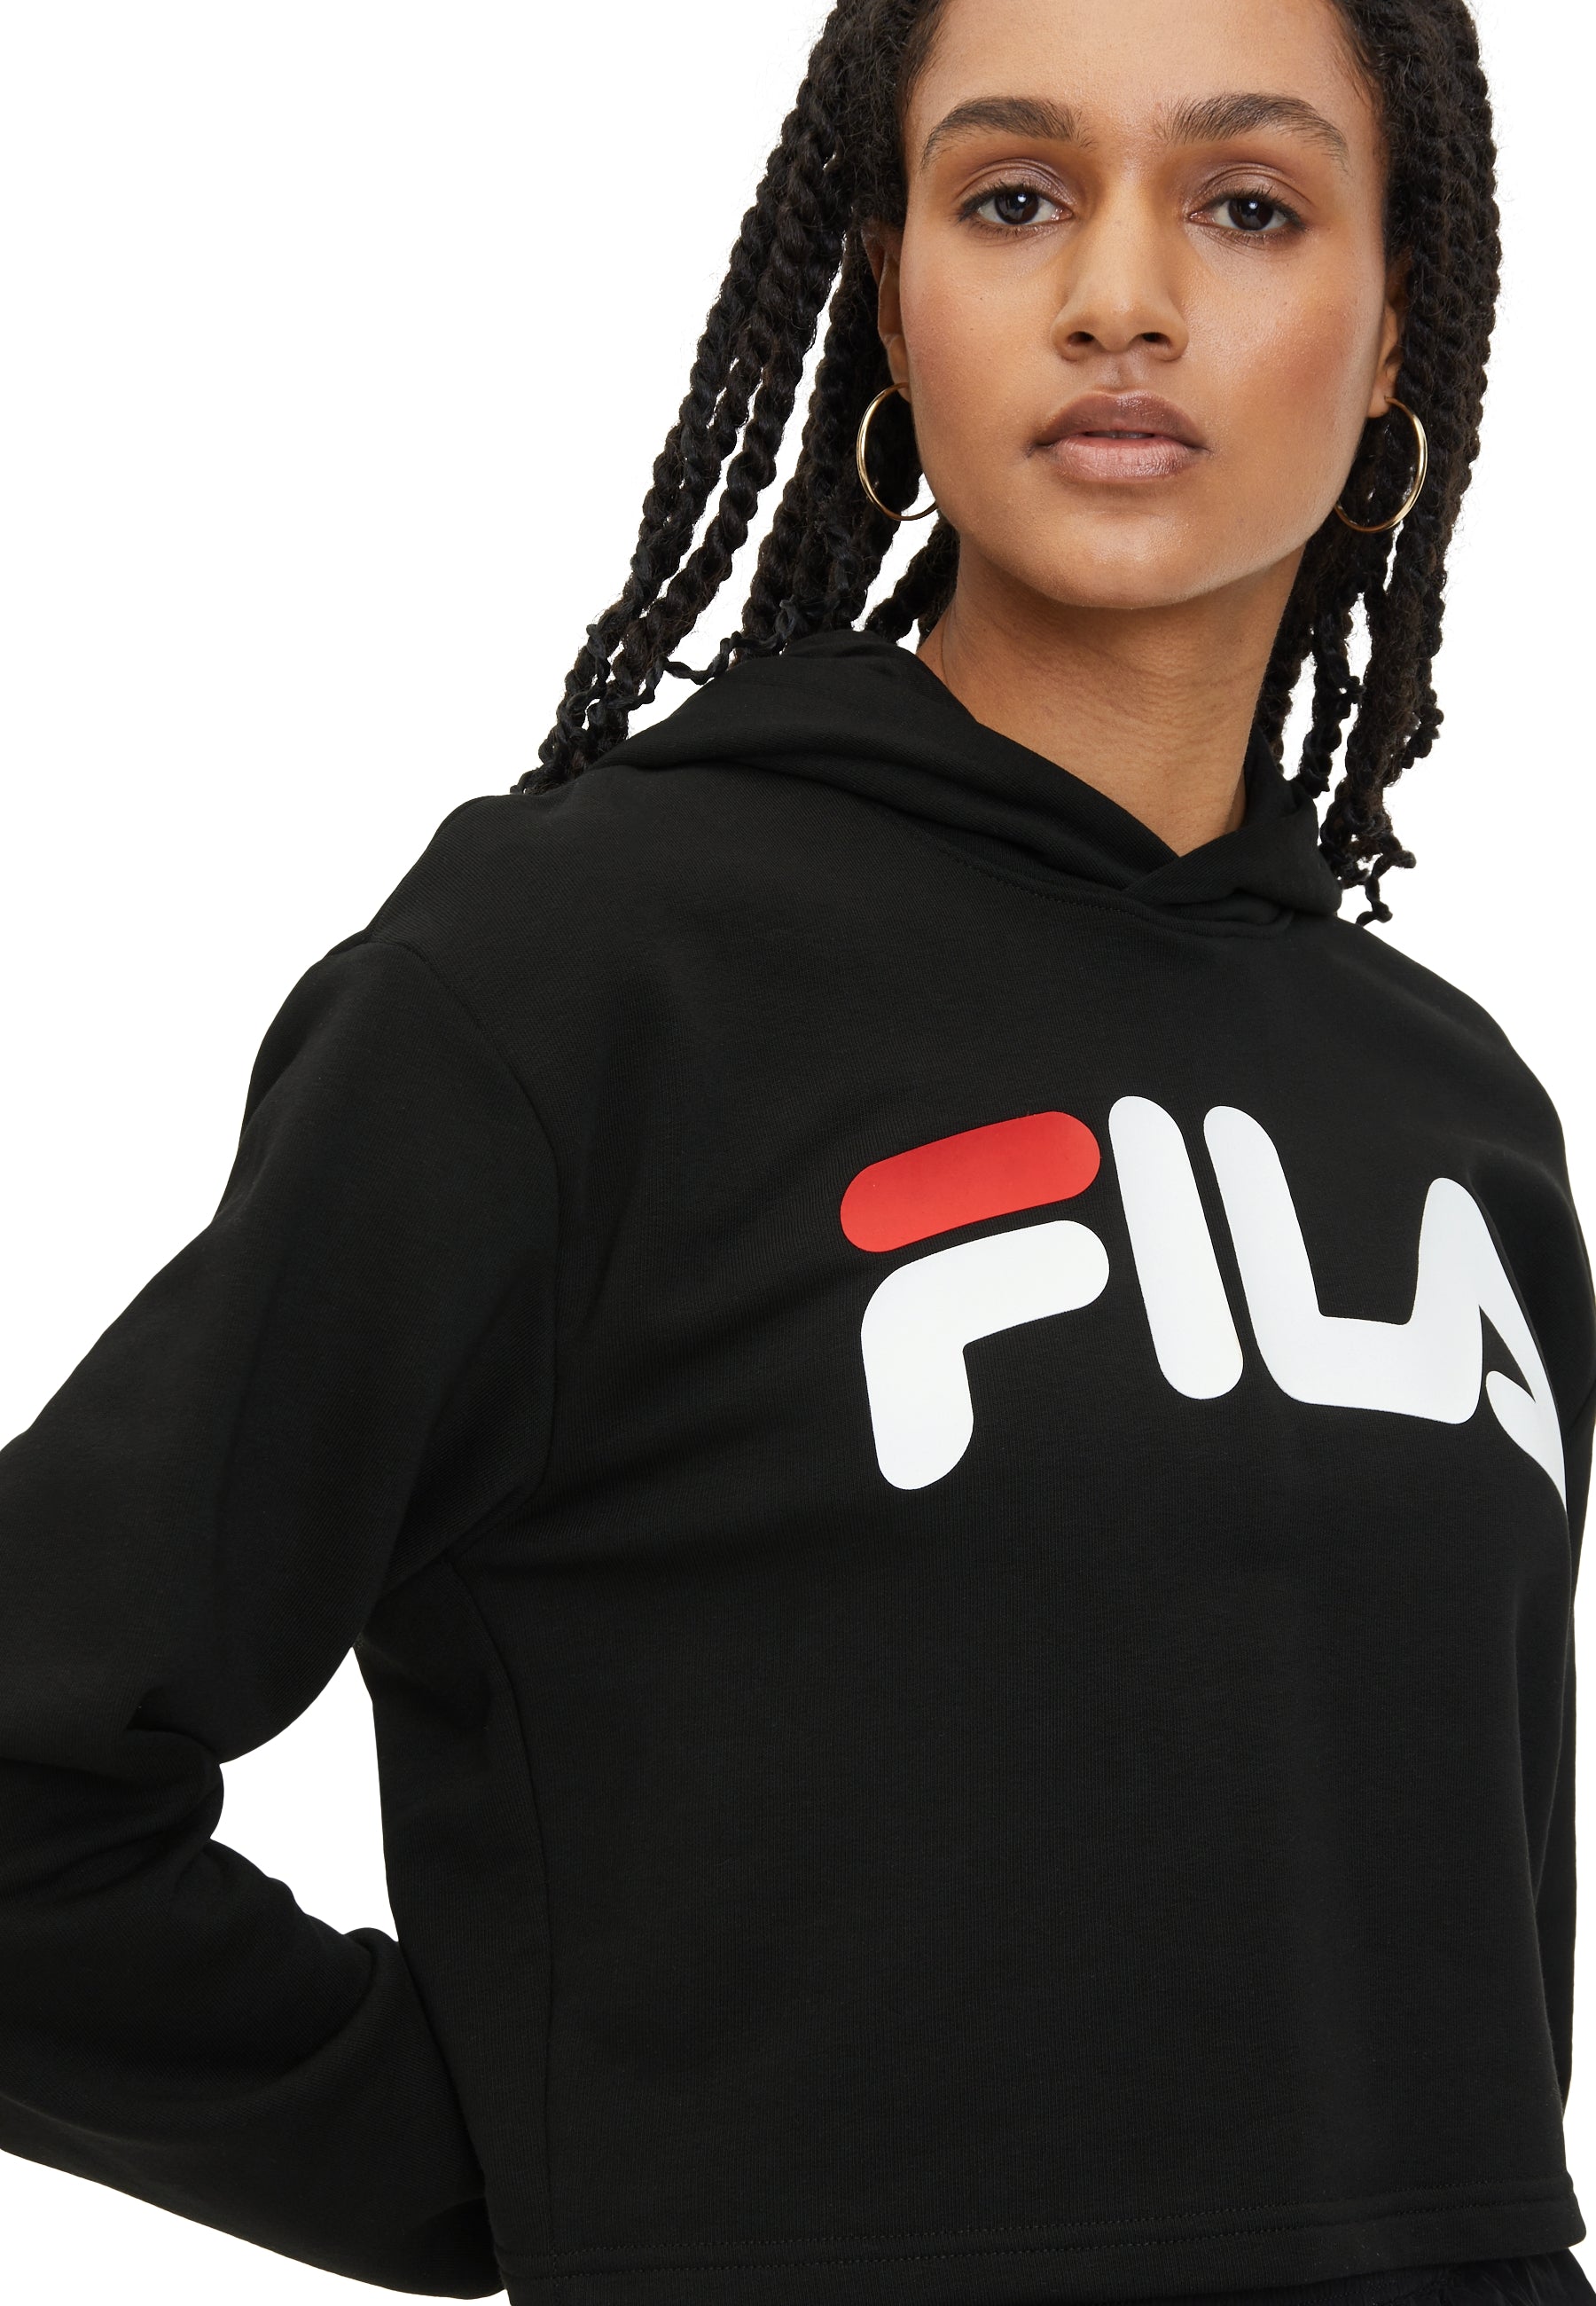 Lafia Cropped Logo Hoody in Black Sweatshirts Fila   